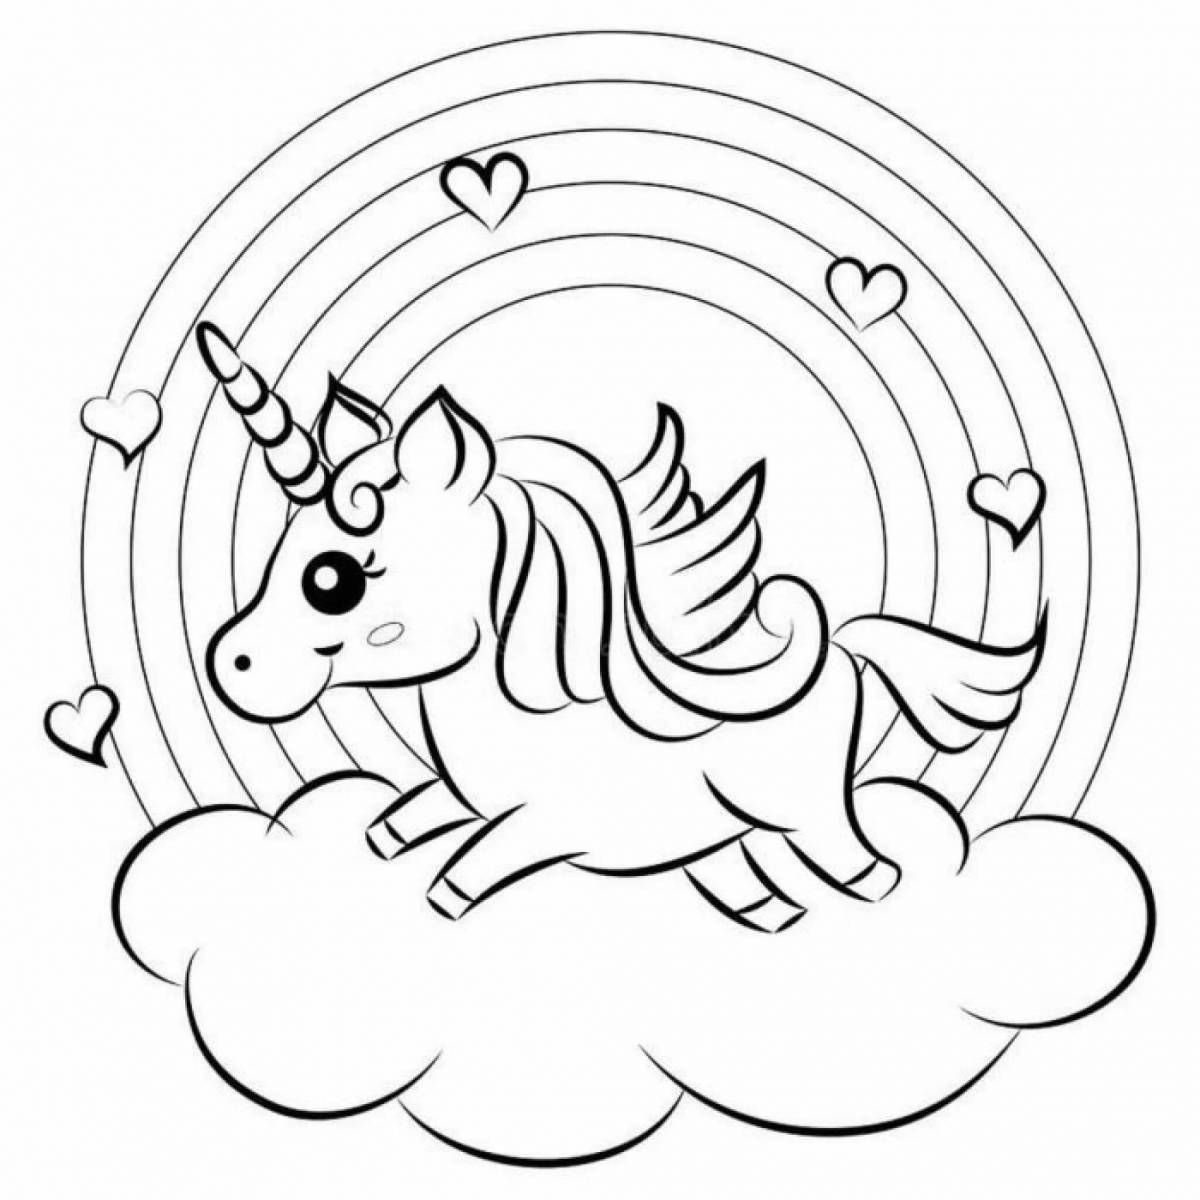 Shiny unicorn coloring book